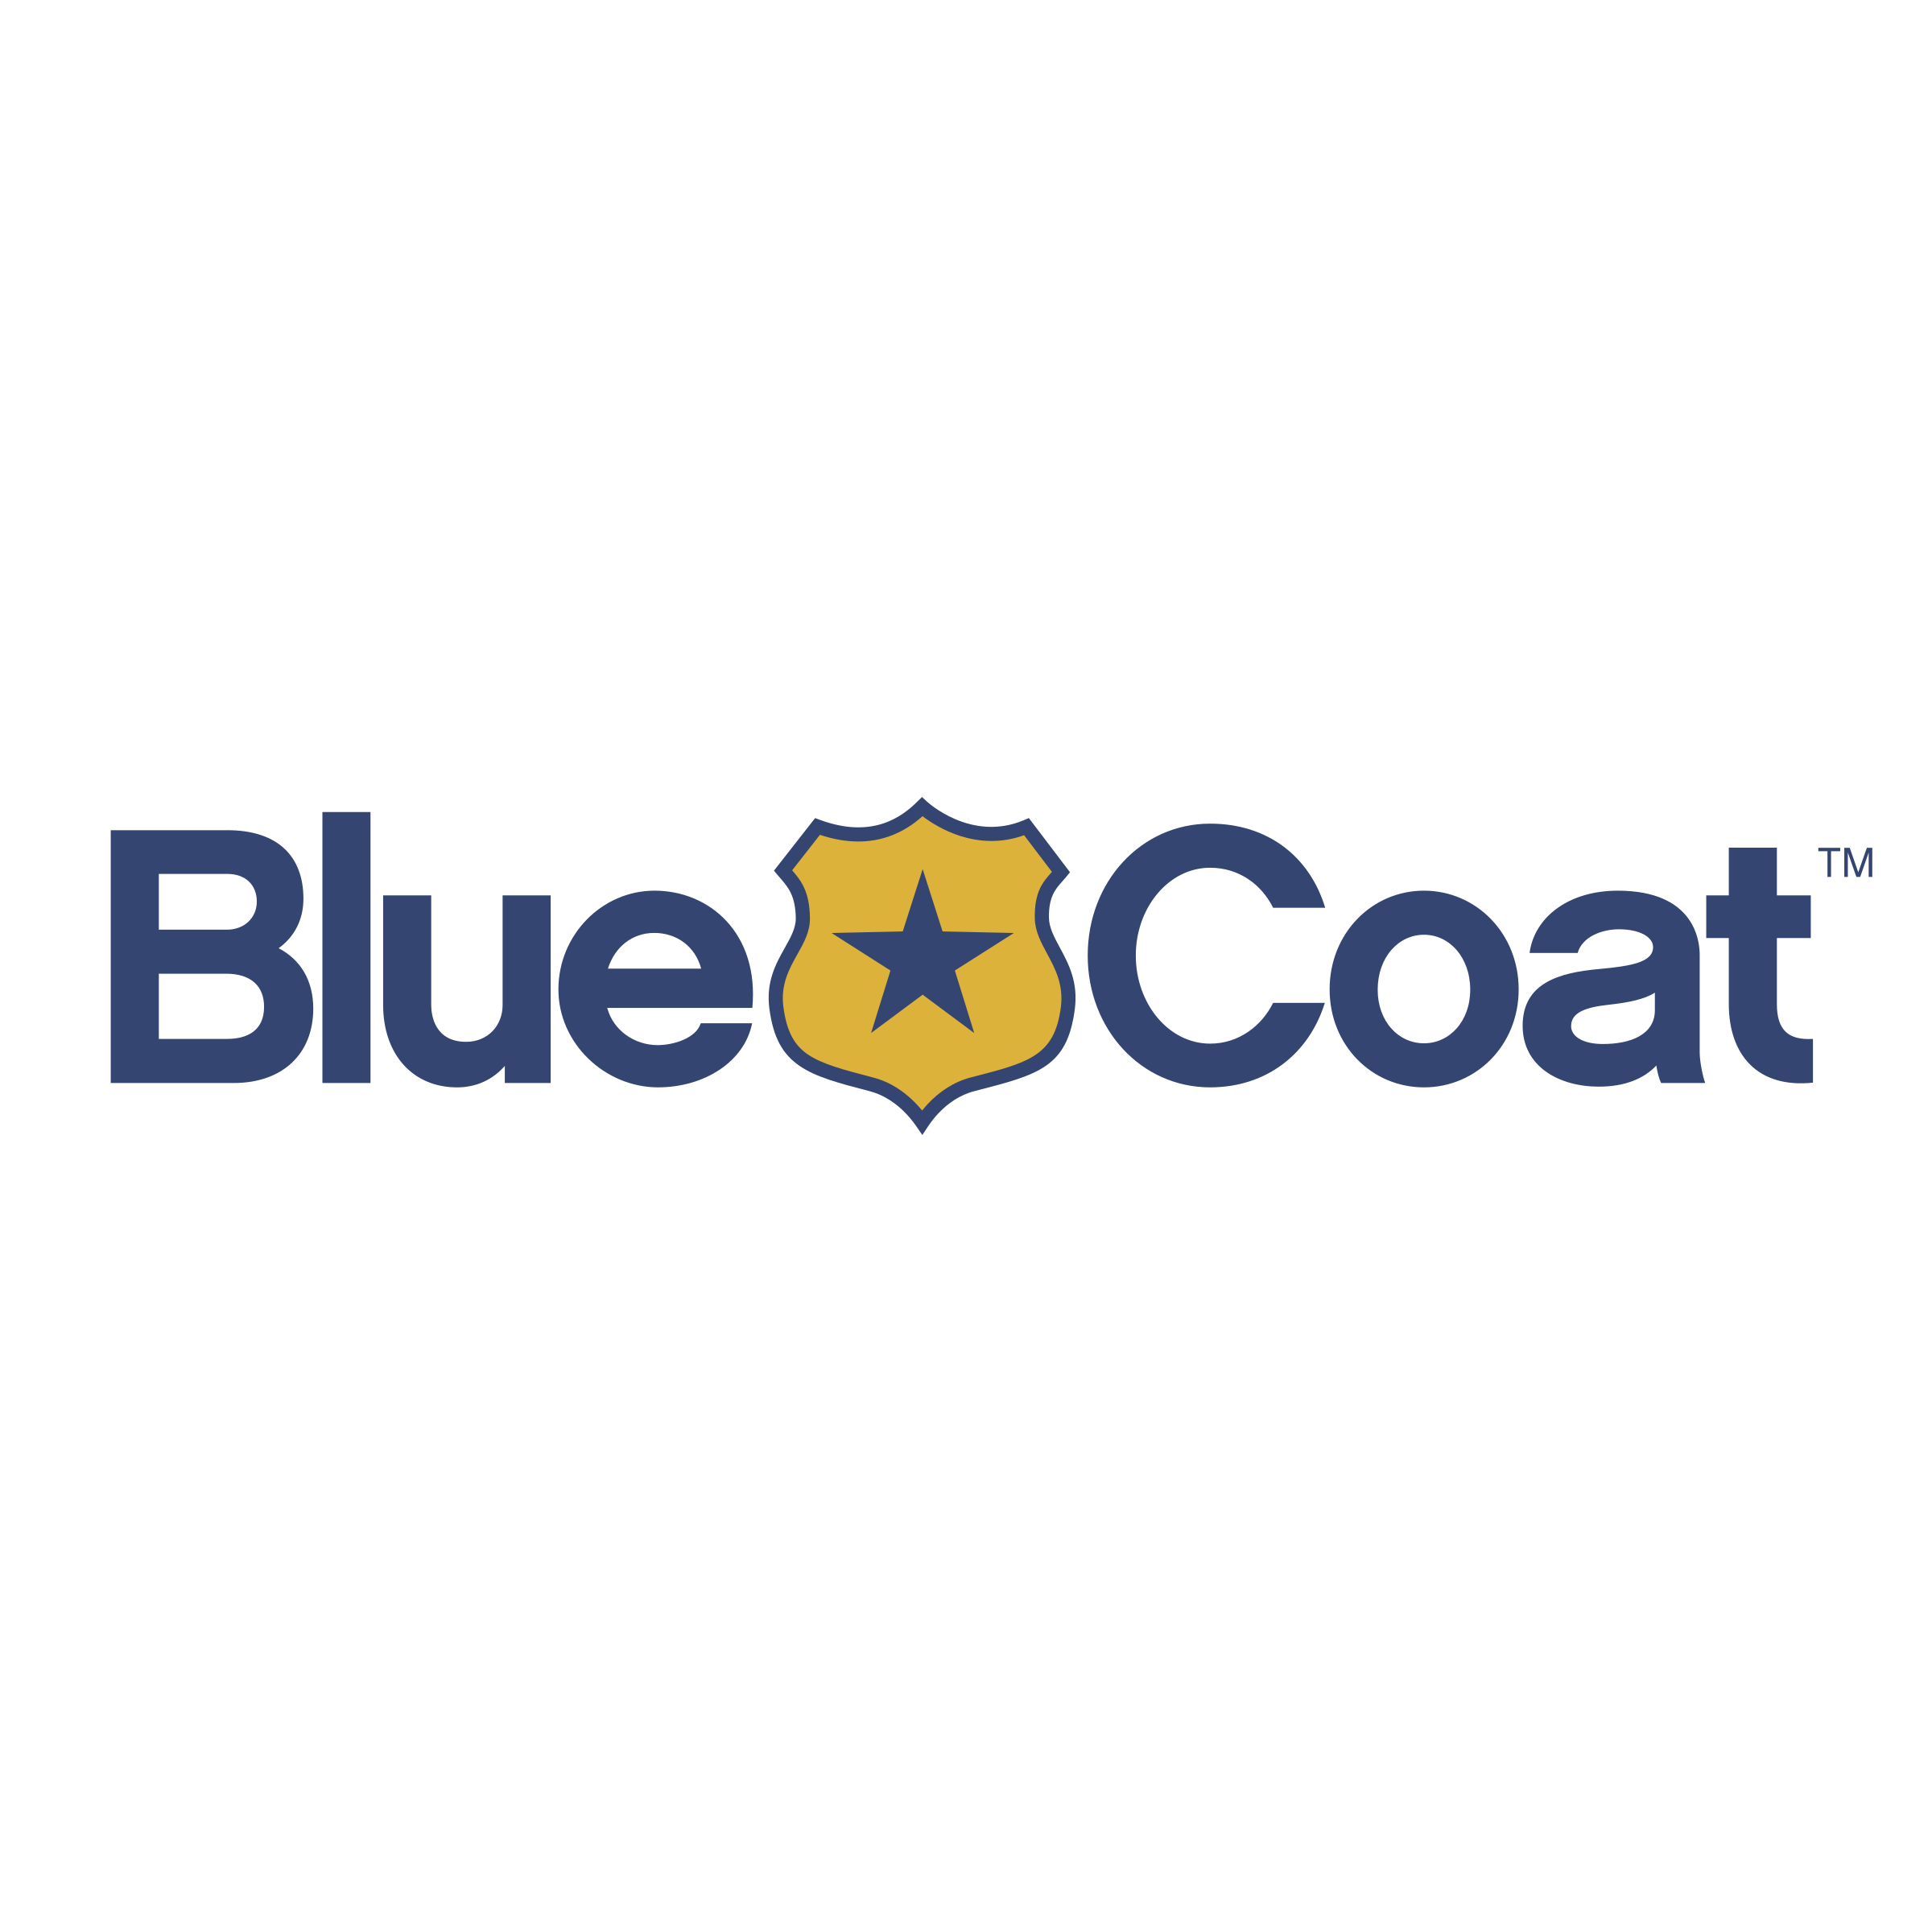 Bluecoat logo .png